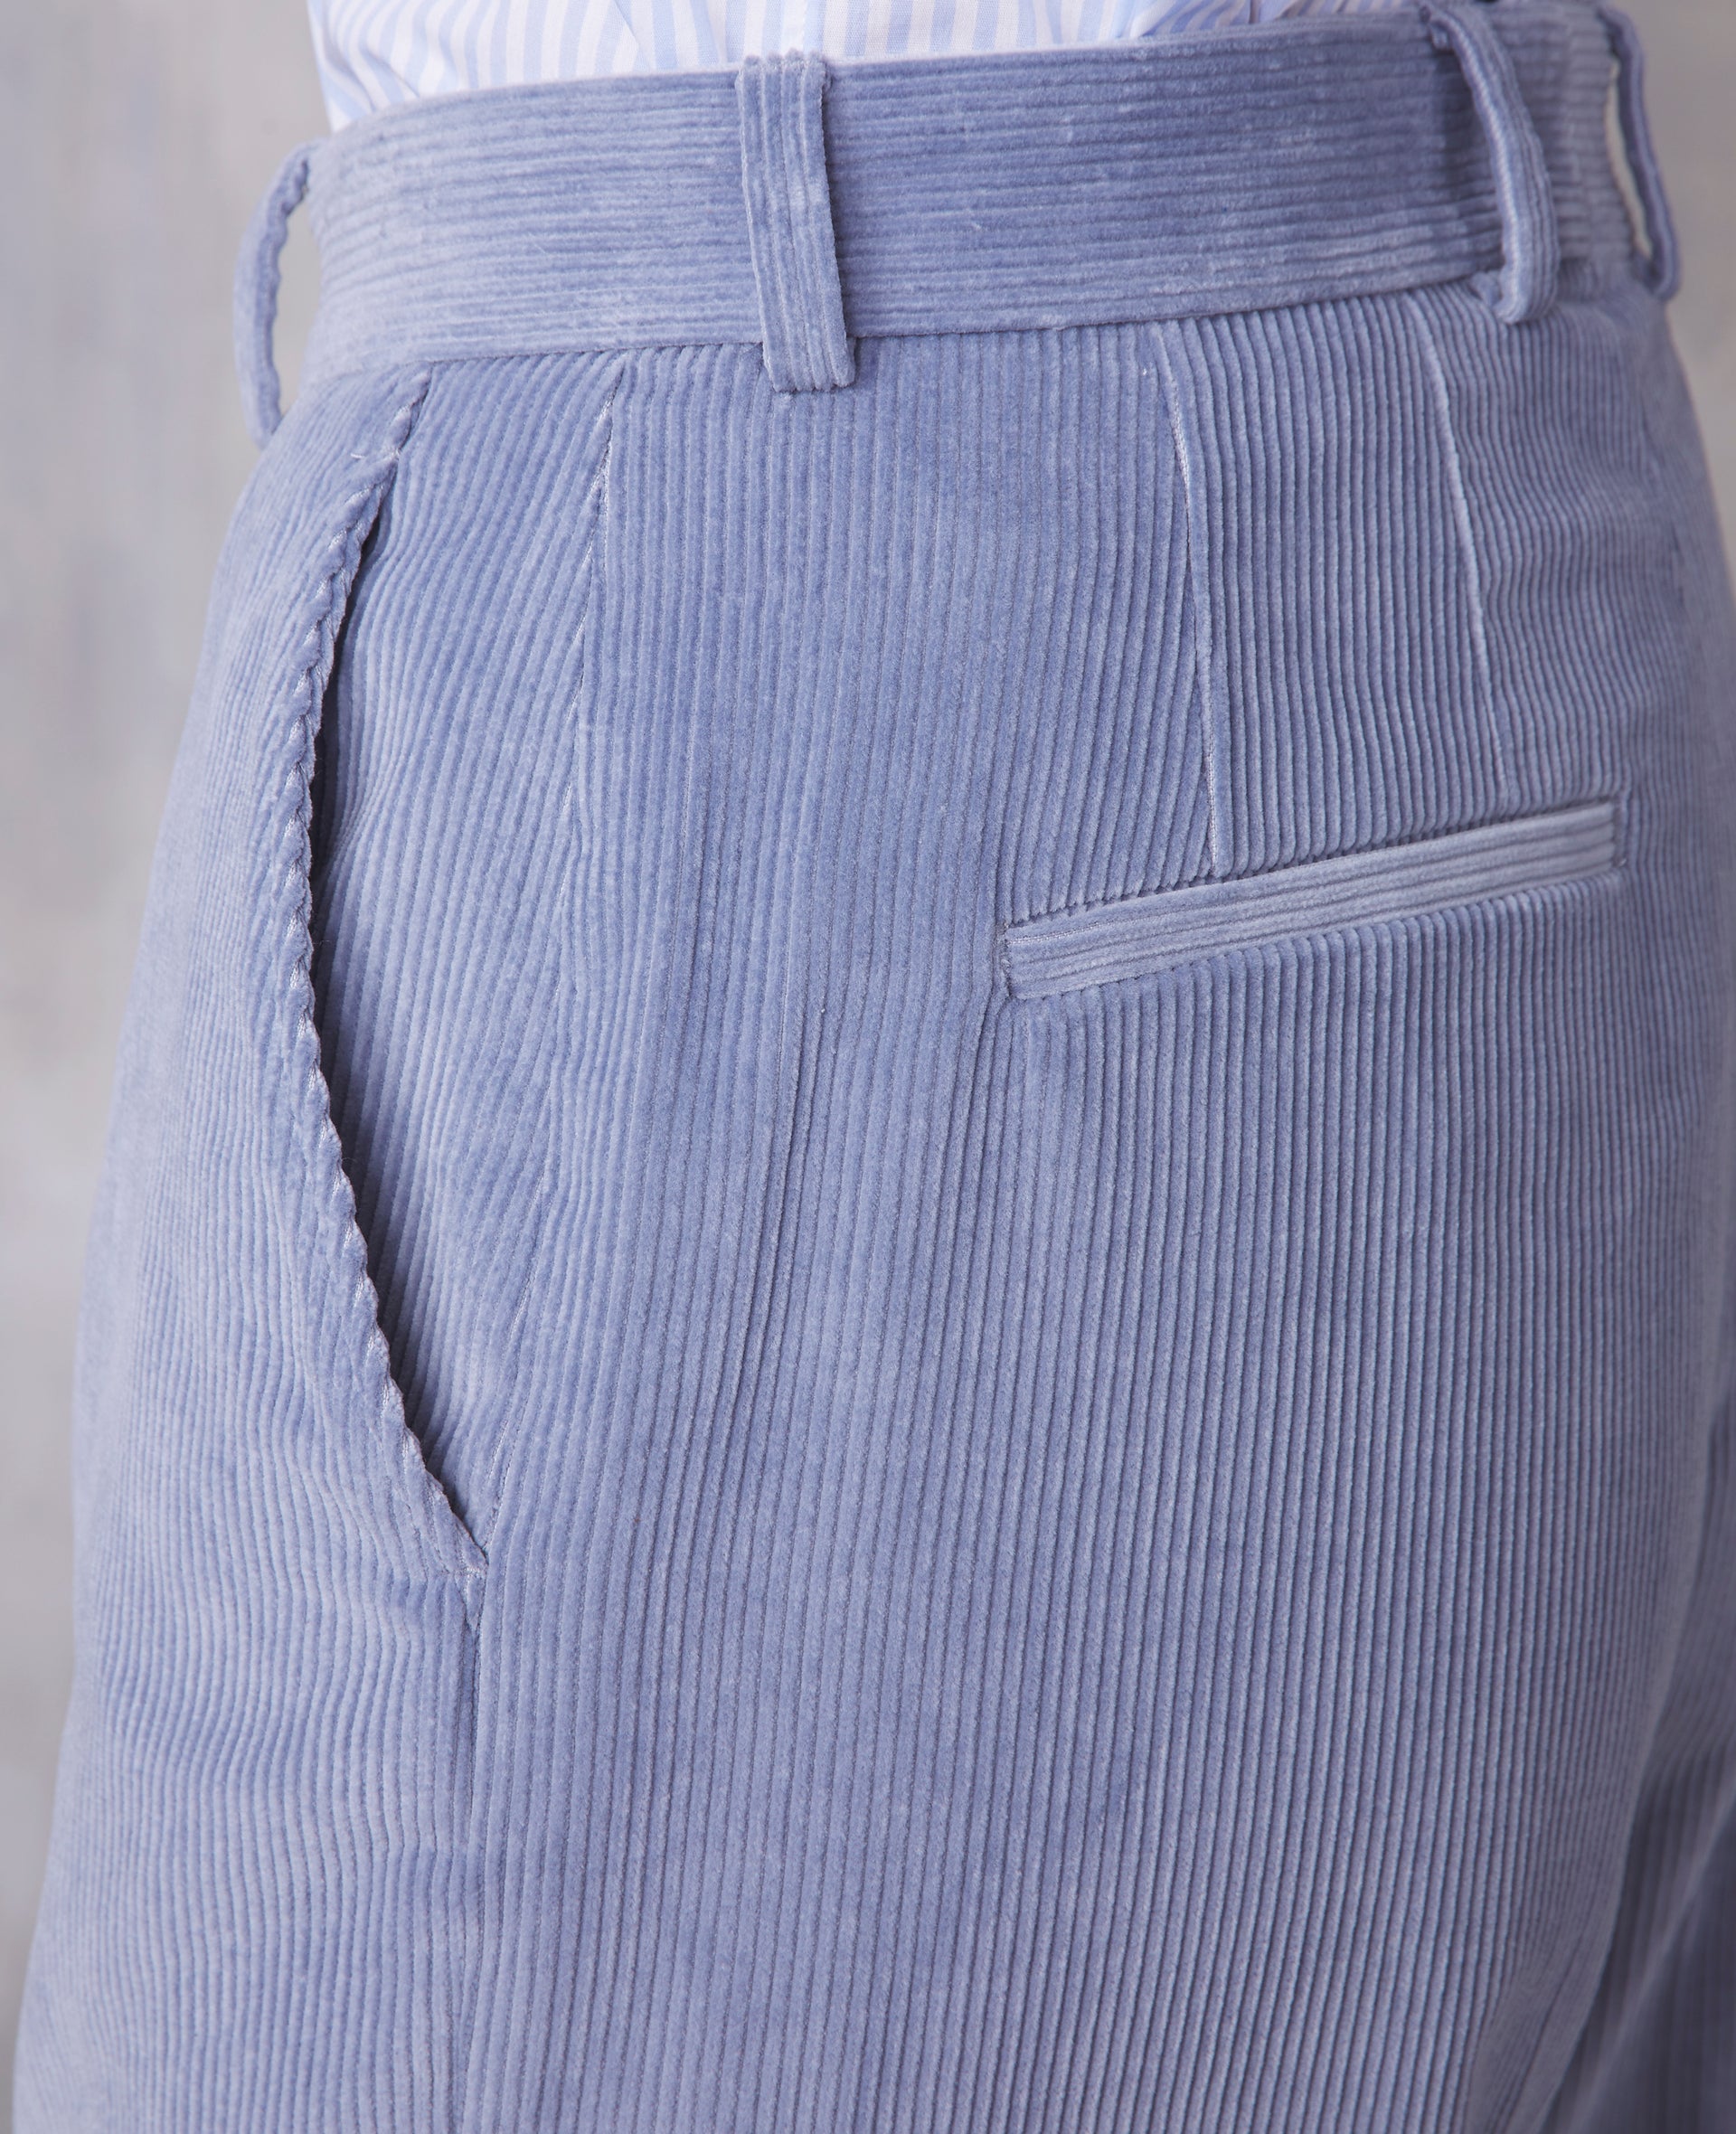 Pantalon sally - Image 4